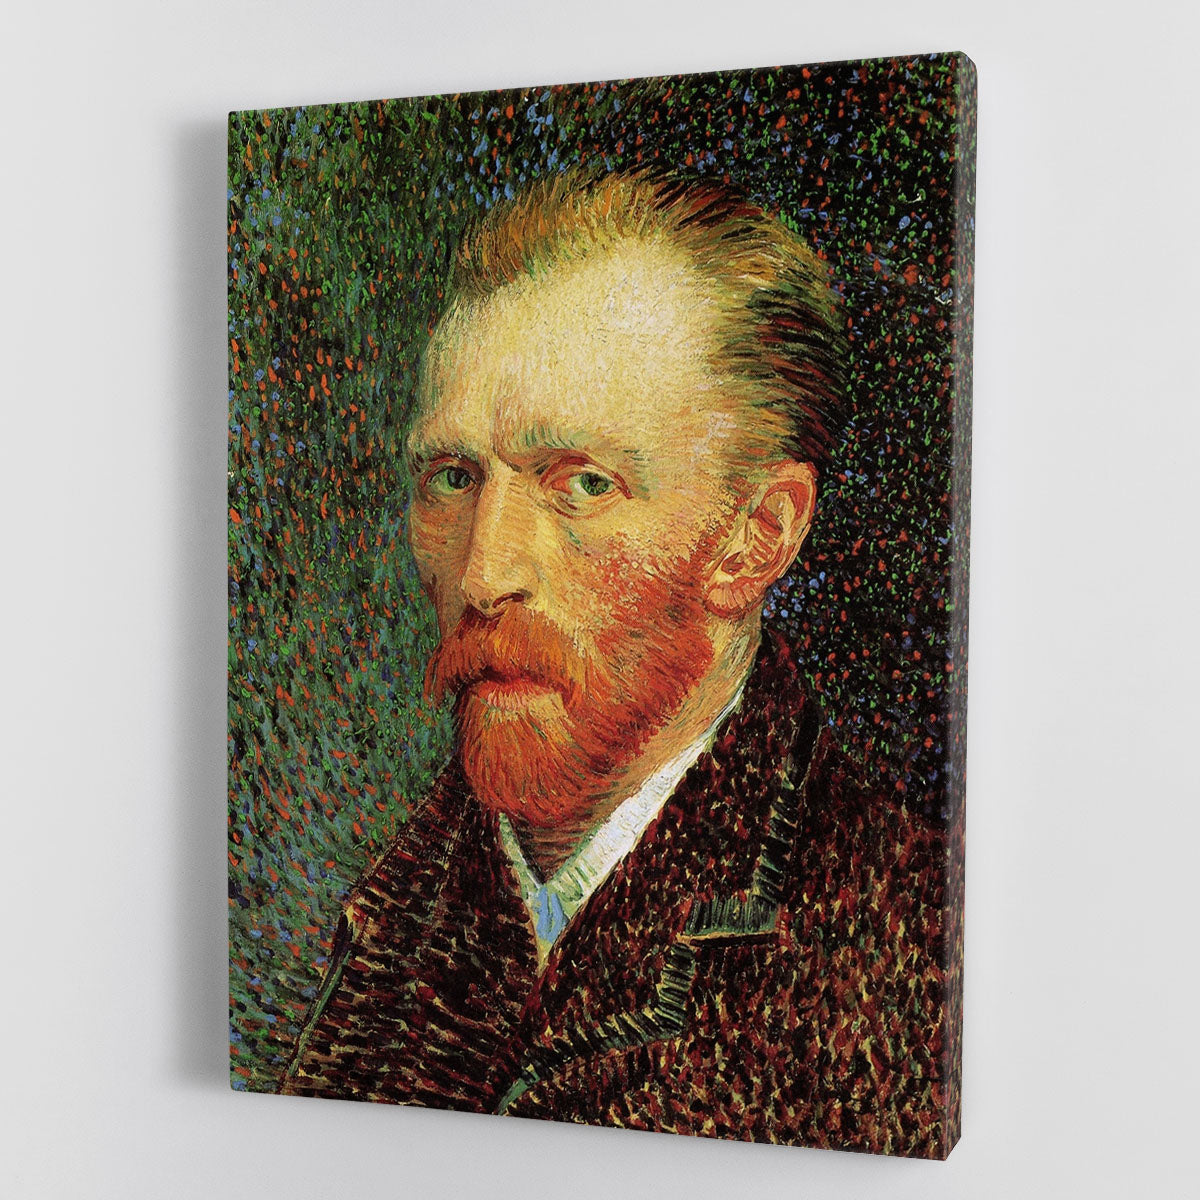 Self-Portrait 3 by Van Gogh Canvas Print or Poster - Canvas Art Rocks - 1